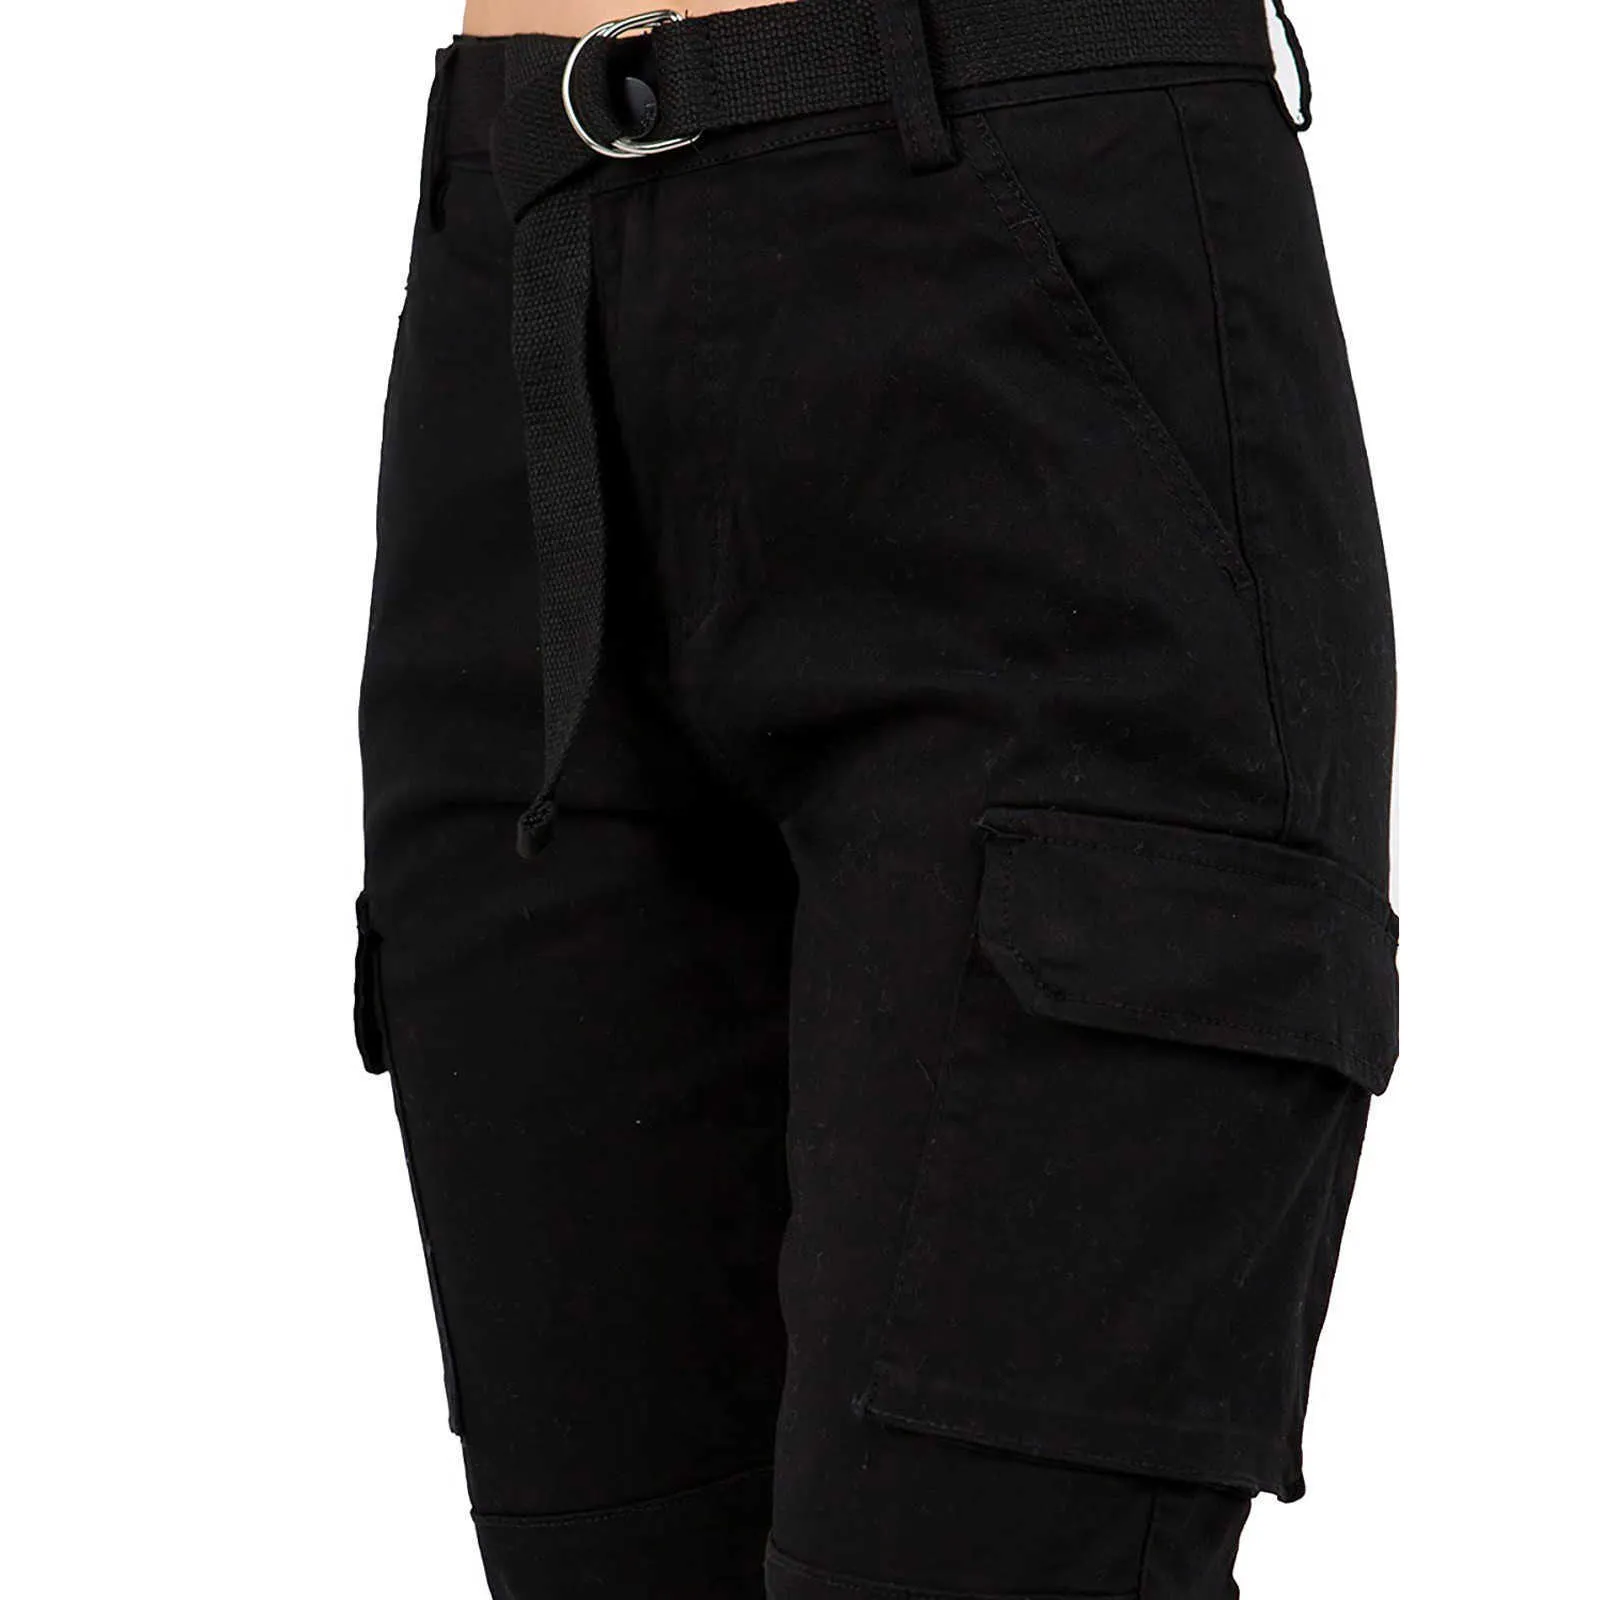 TELOTUNY Women's pants Coll Street Pants Ladies Casual camouflage trousers High Slim femme pantalon Dropshipp Q0801